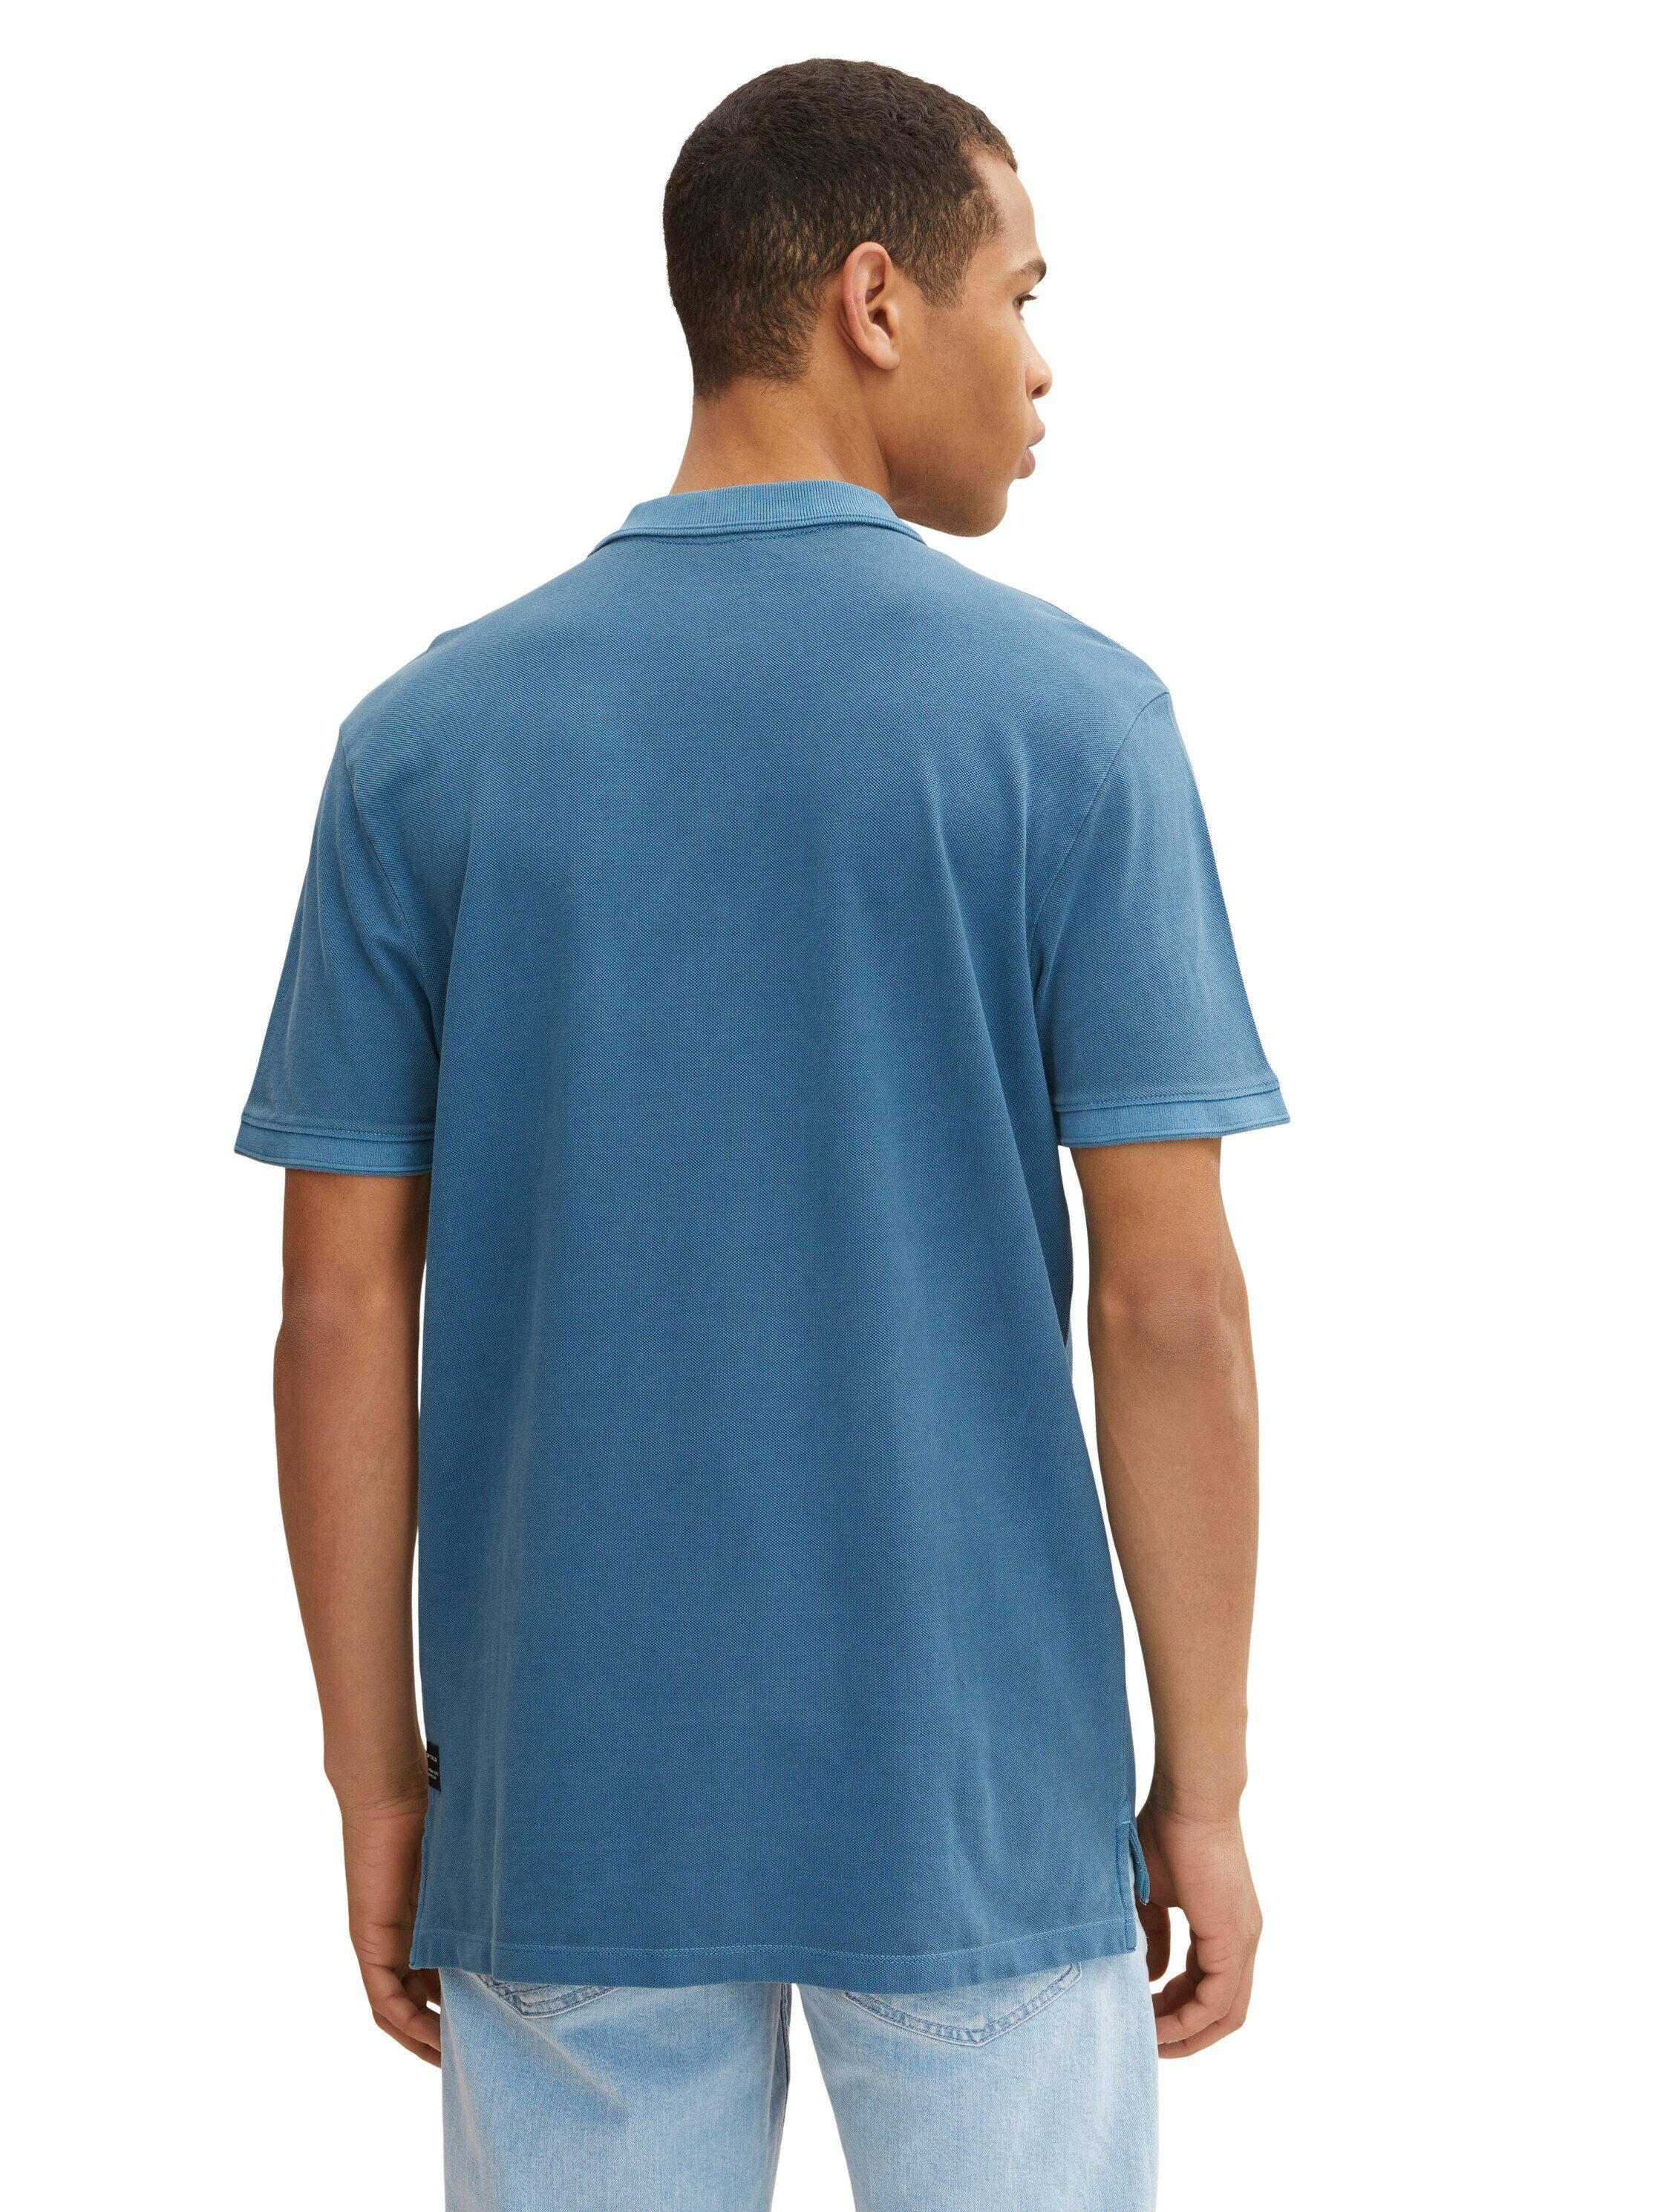 TOM TAILOR Denim Kurzarmshirt mit Poloshirt TOM Poloshirt blau TAILOR Polokragen Garment